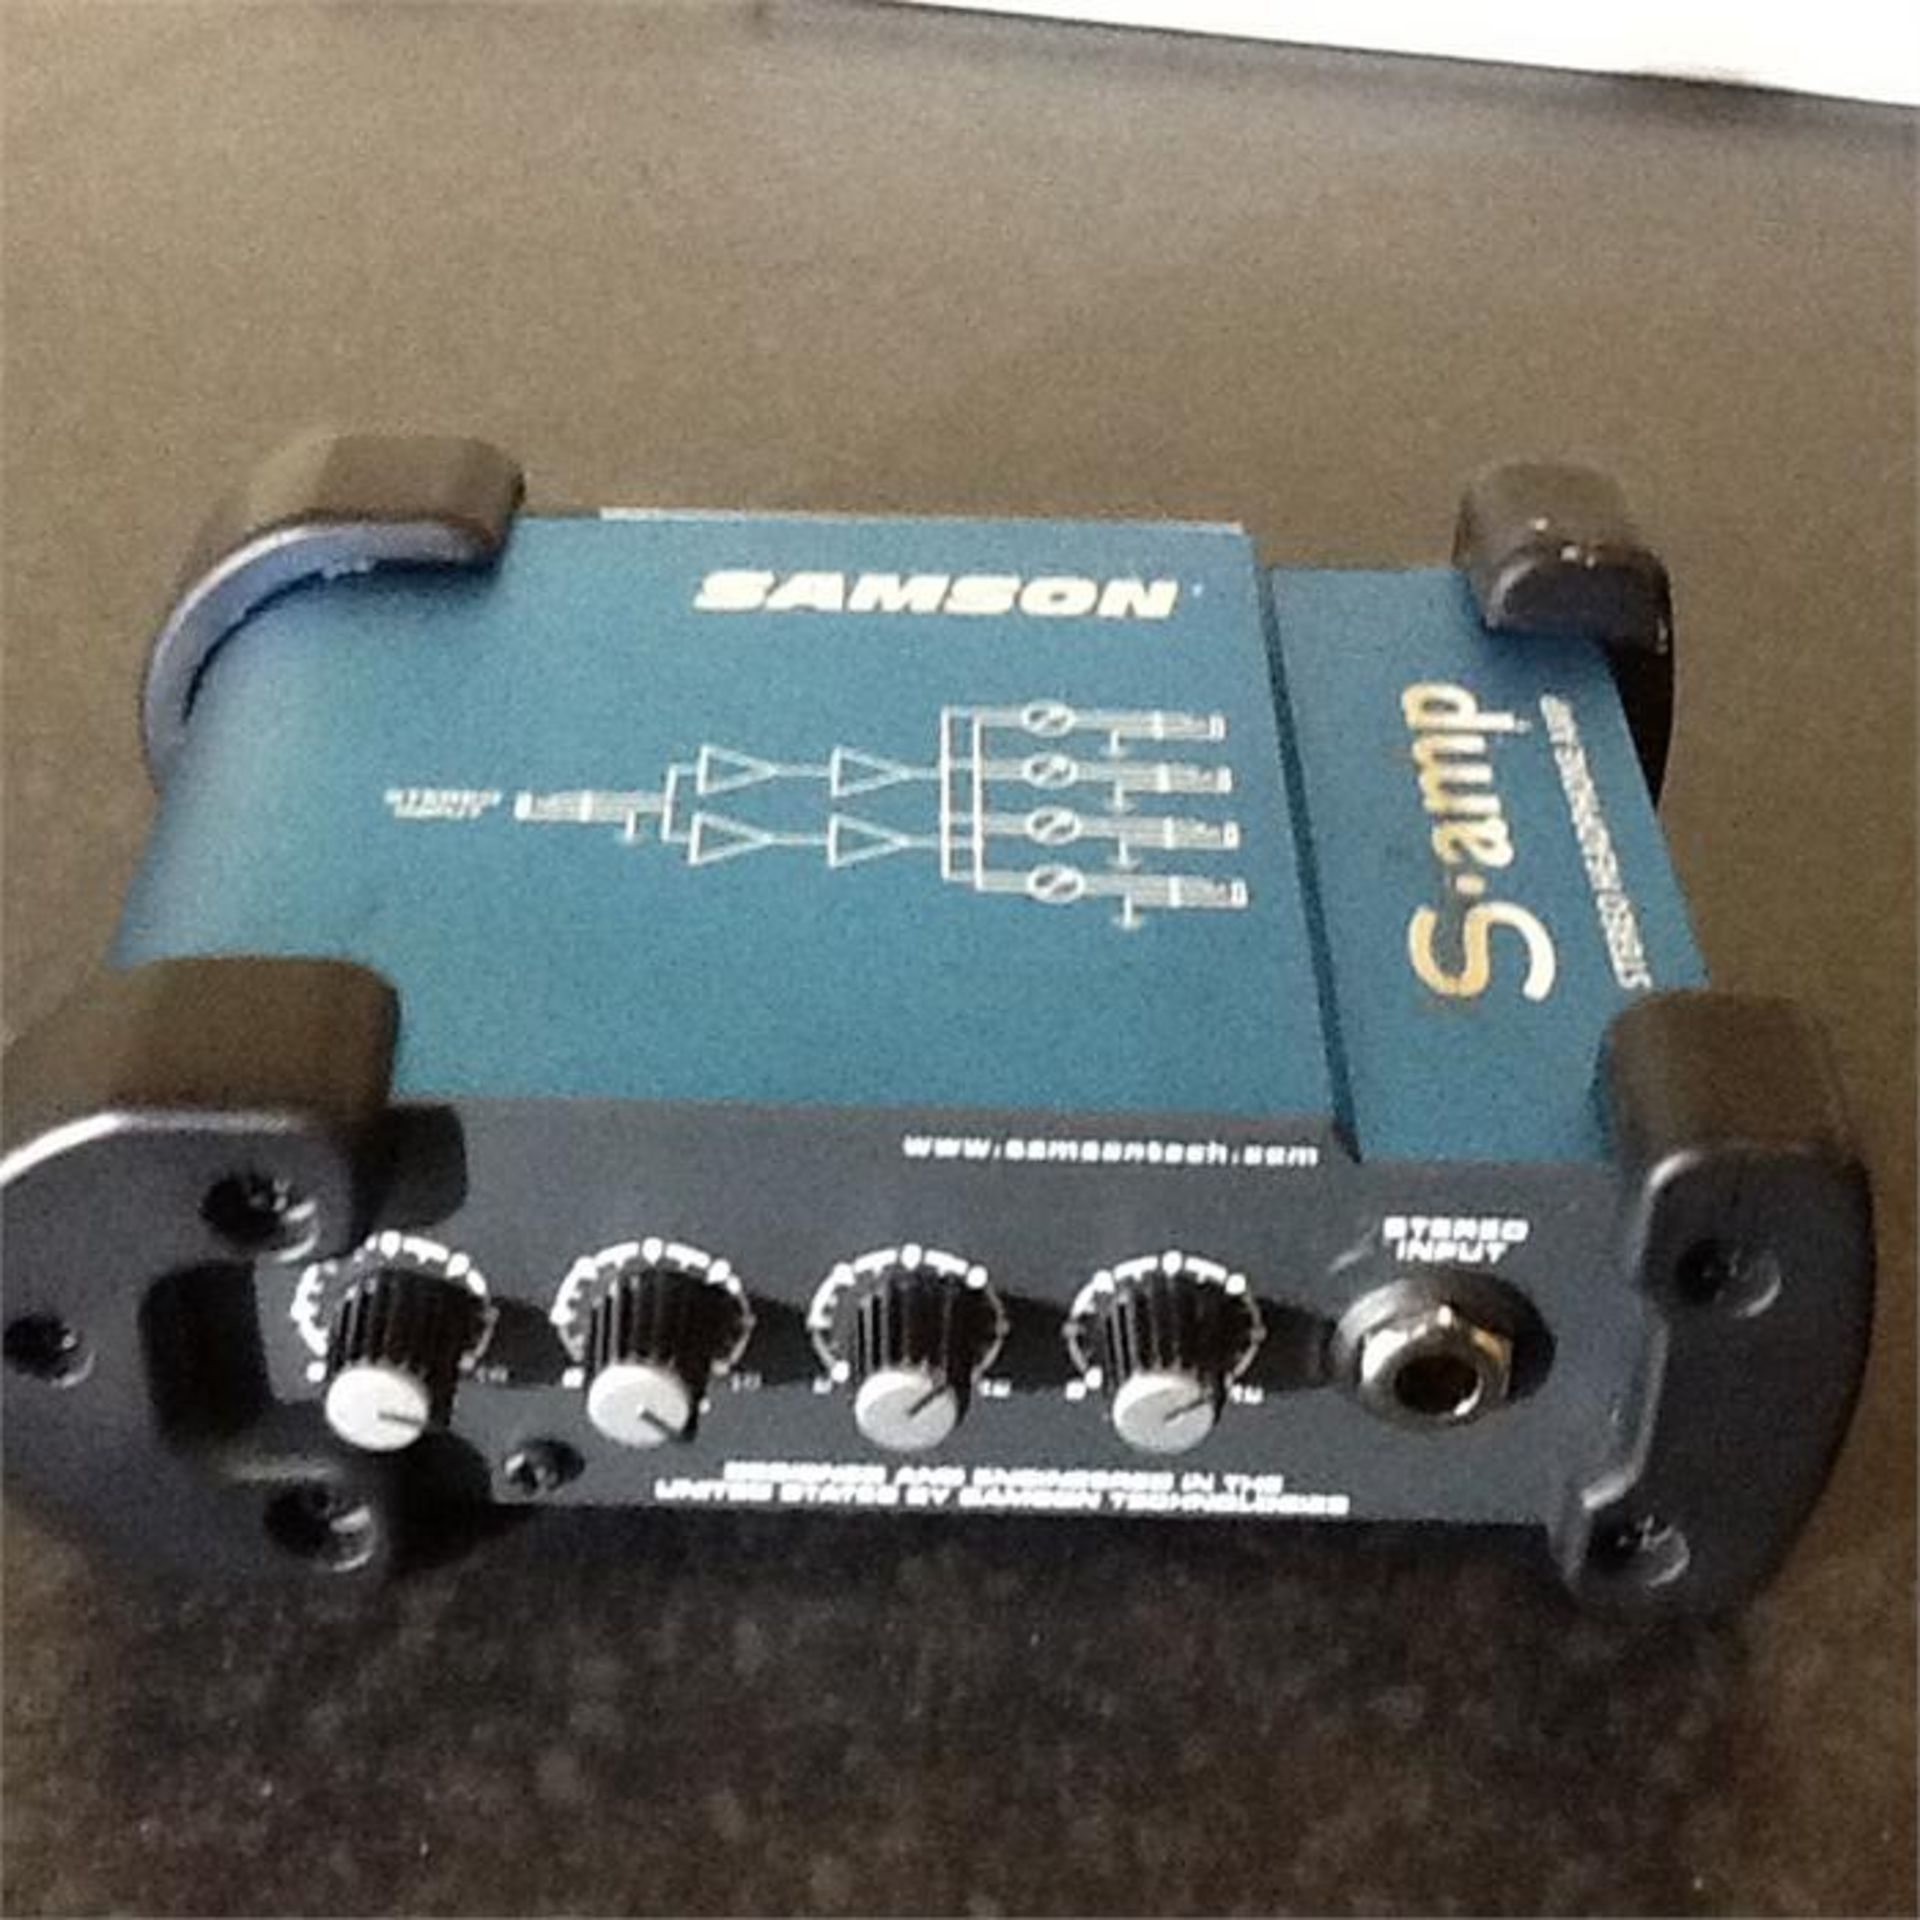 Samson s amp. Headphone amp. No lead - Image 4 of 5